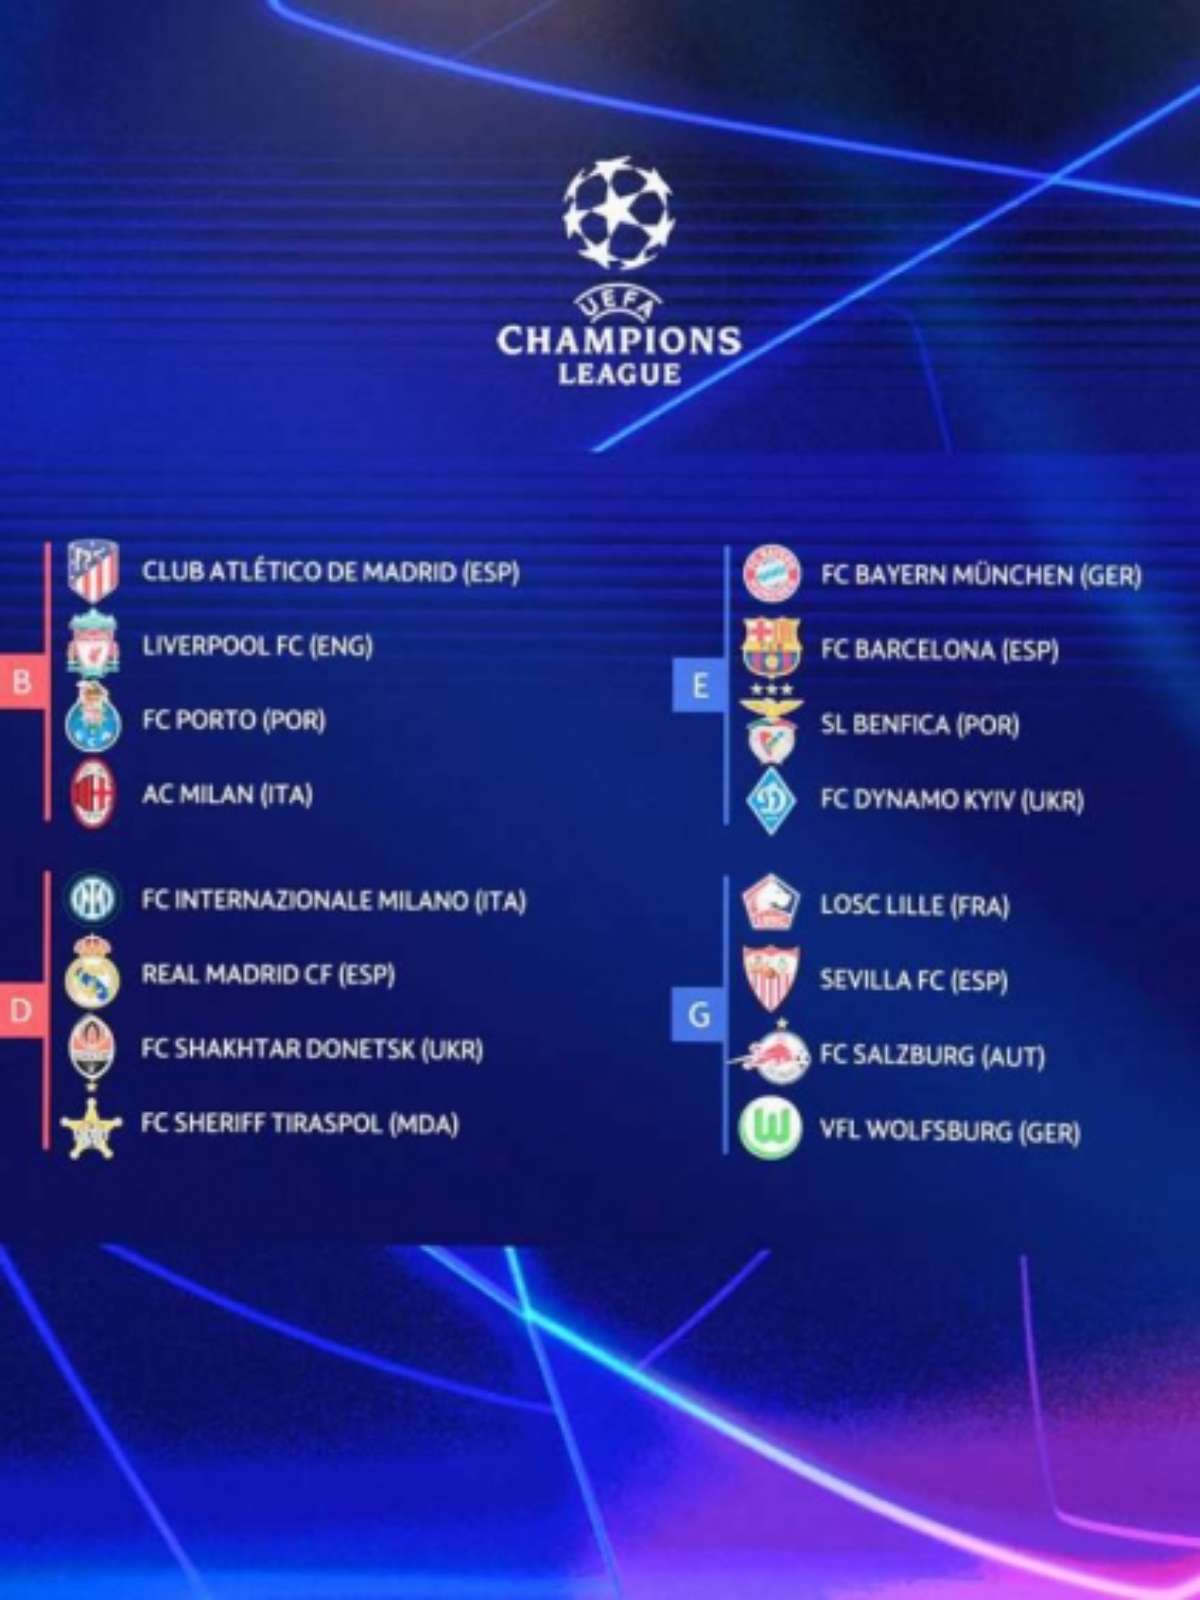 Champions League 22/23: OITAVAS DE FINAIS DEFINIDAS